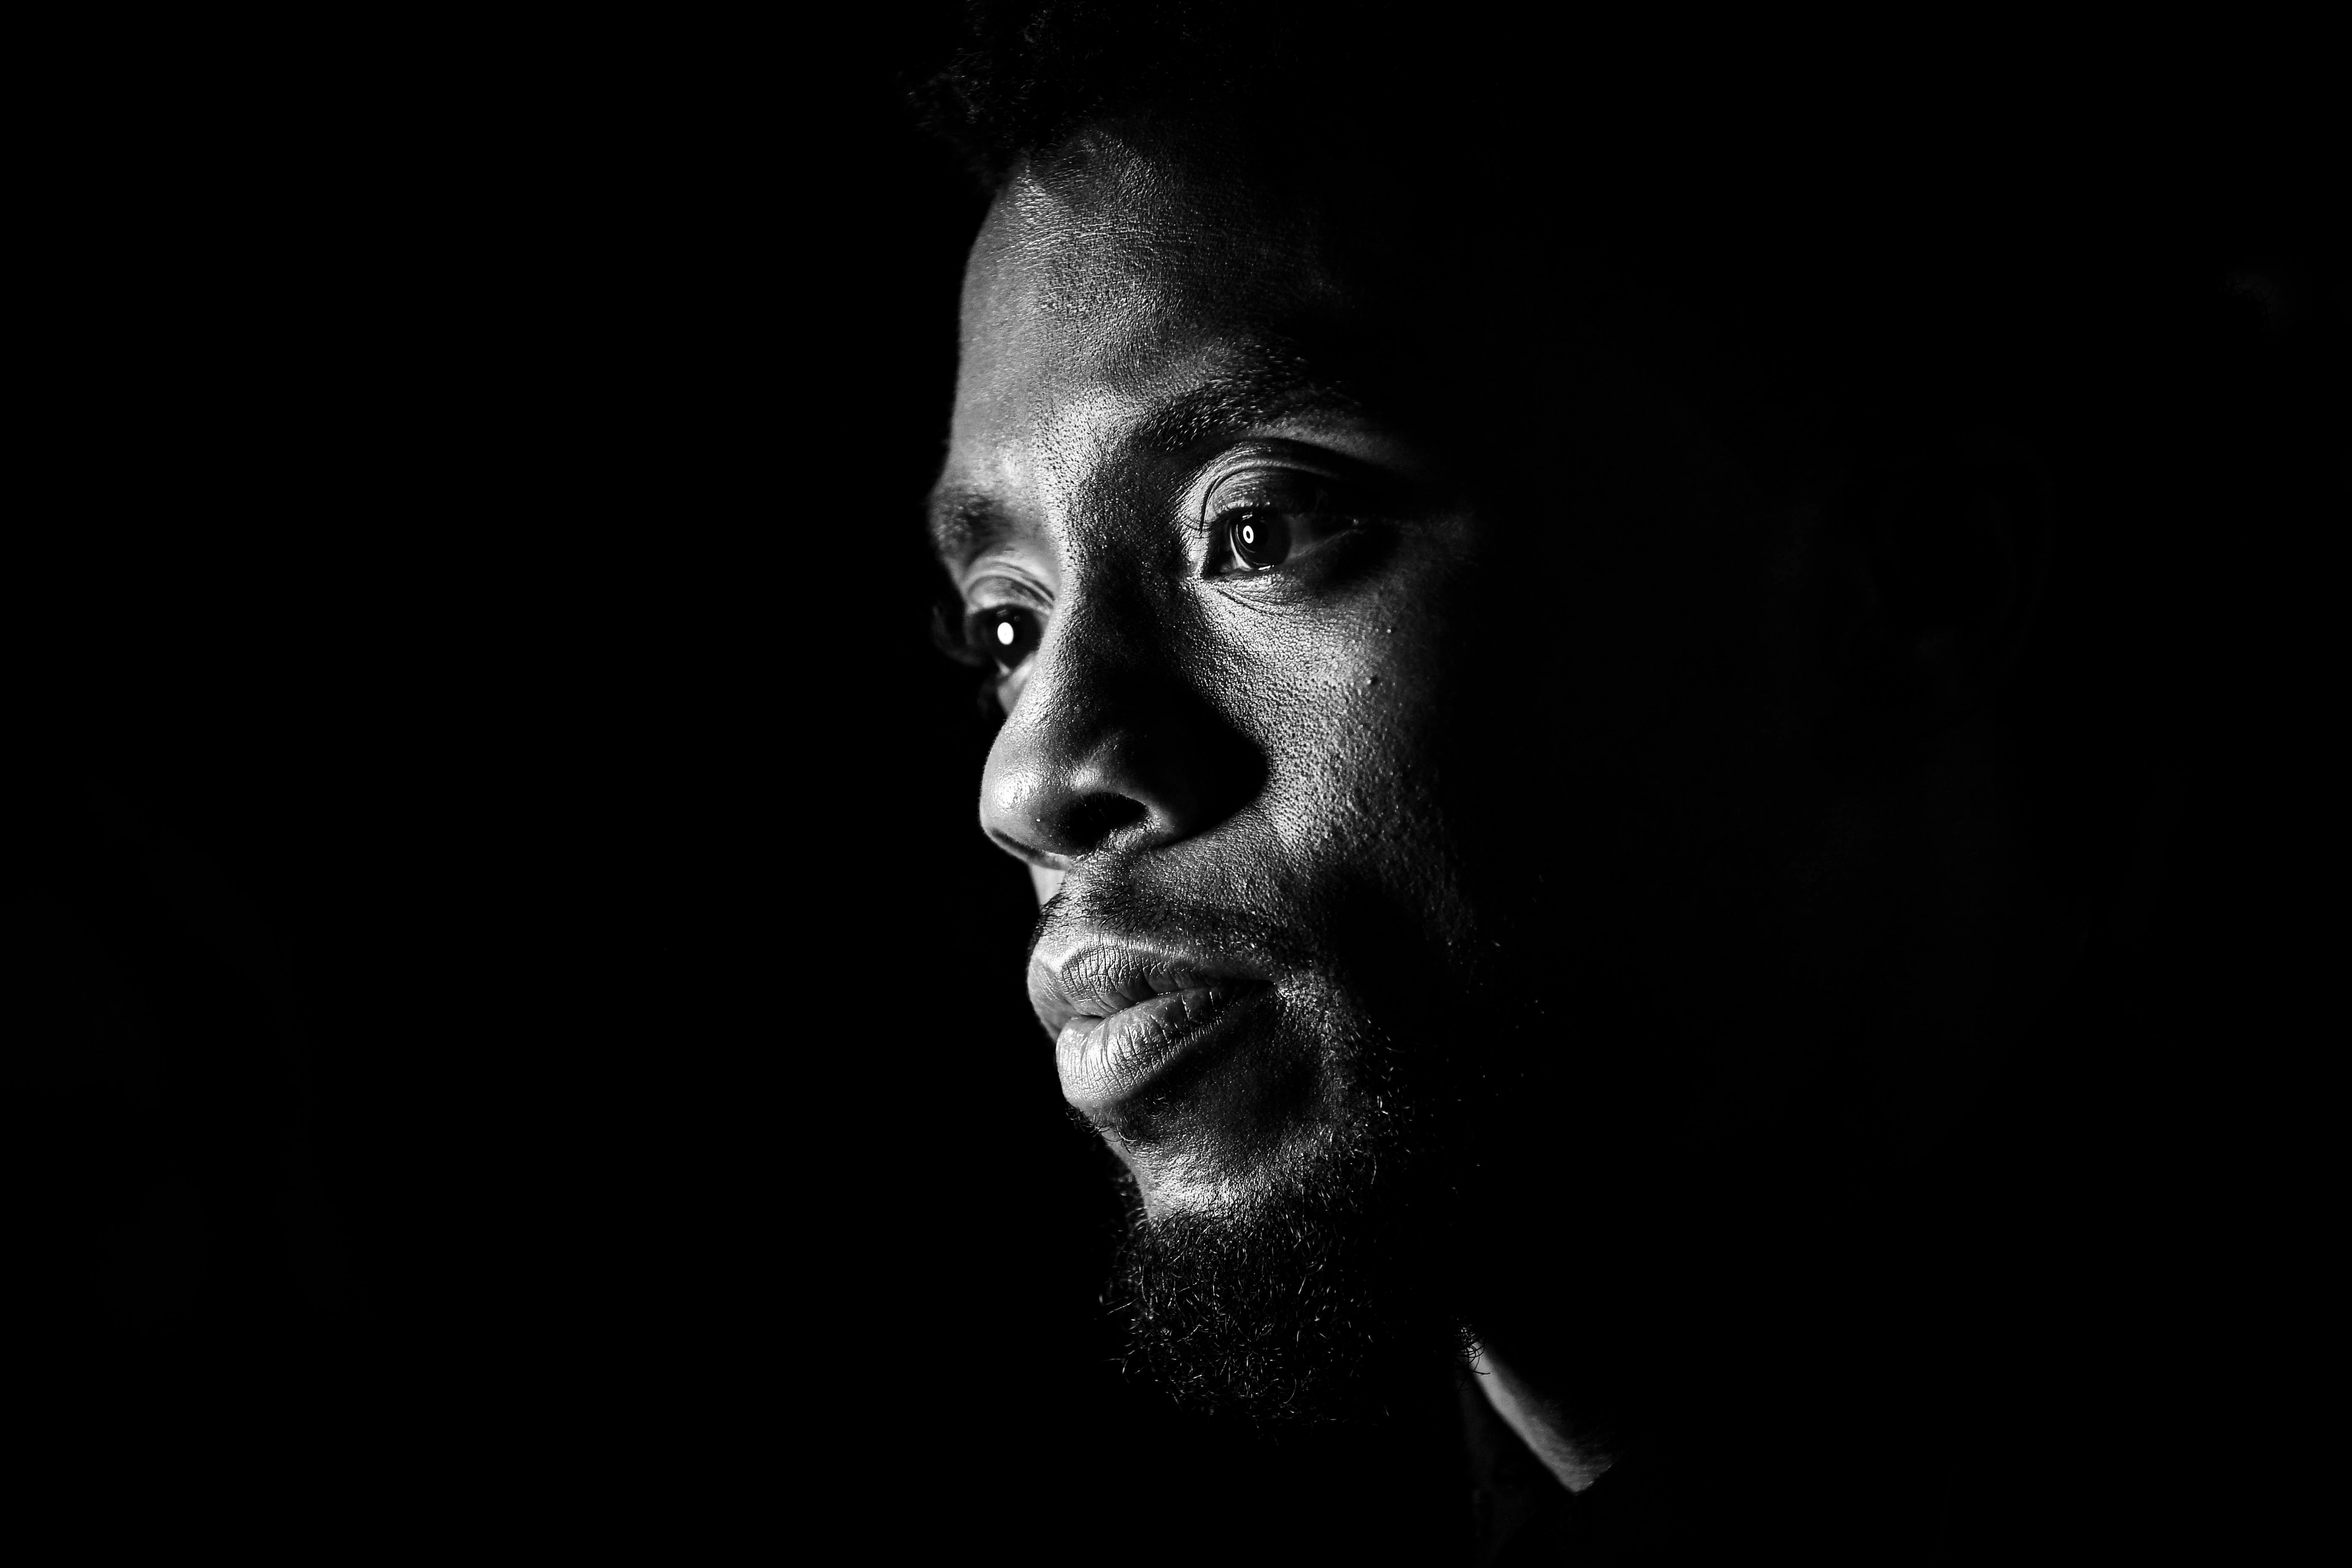 Chadwick Boseman via Getty Images